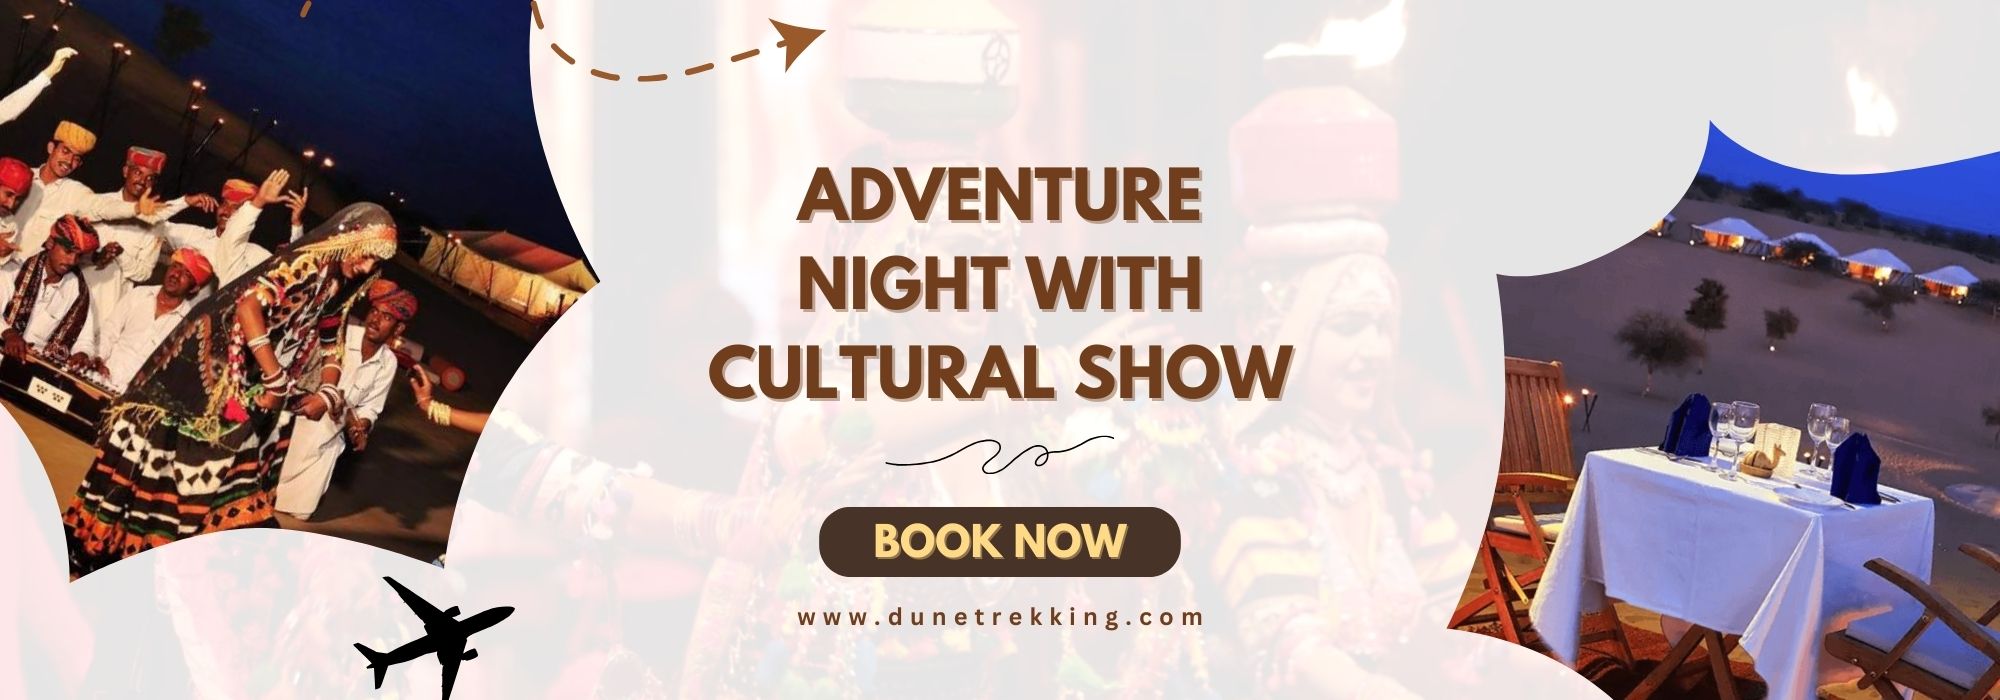 Adventure Night With Cultural Show- dunetrekking